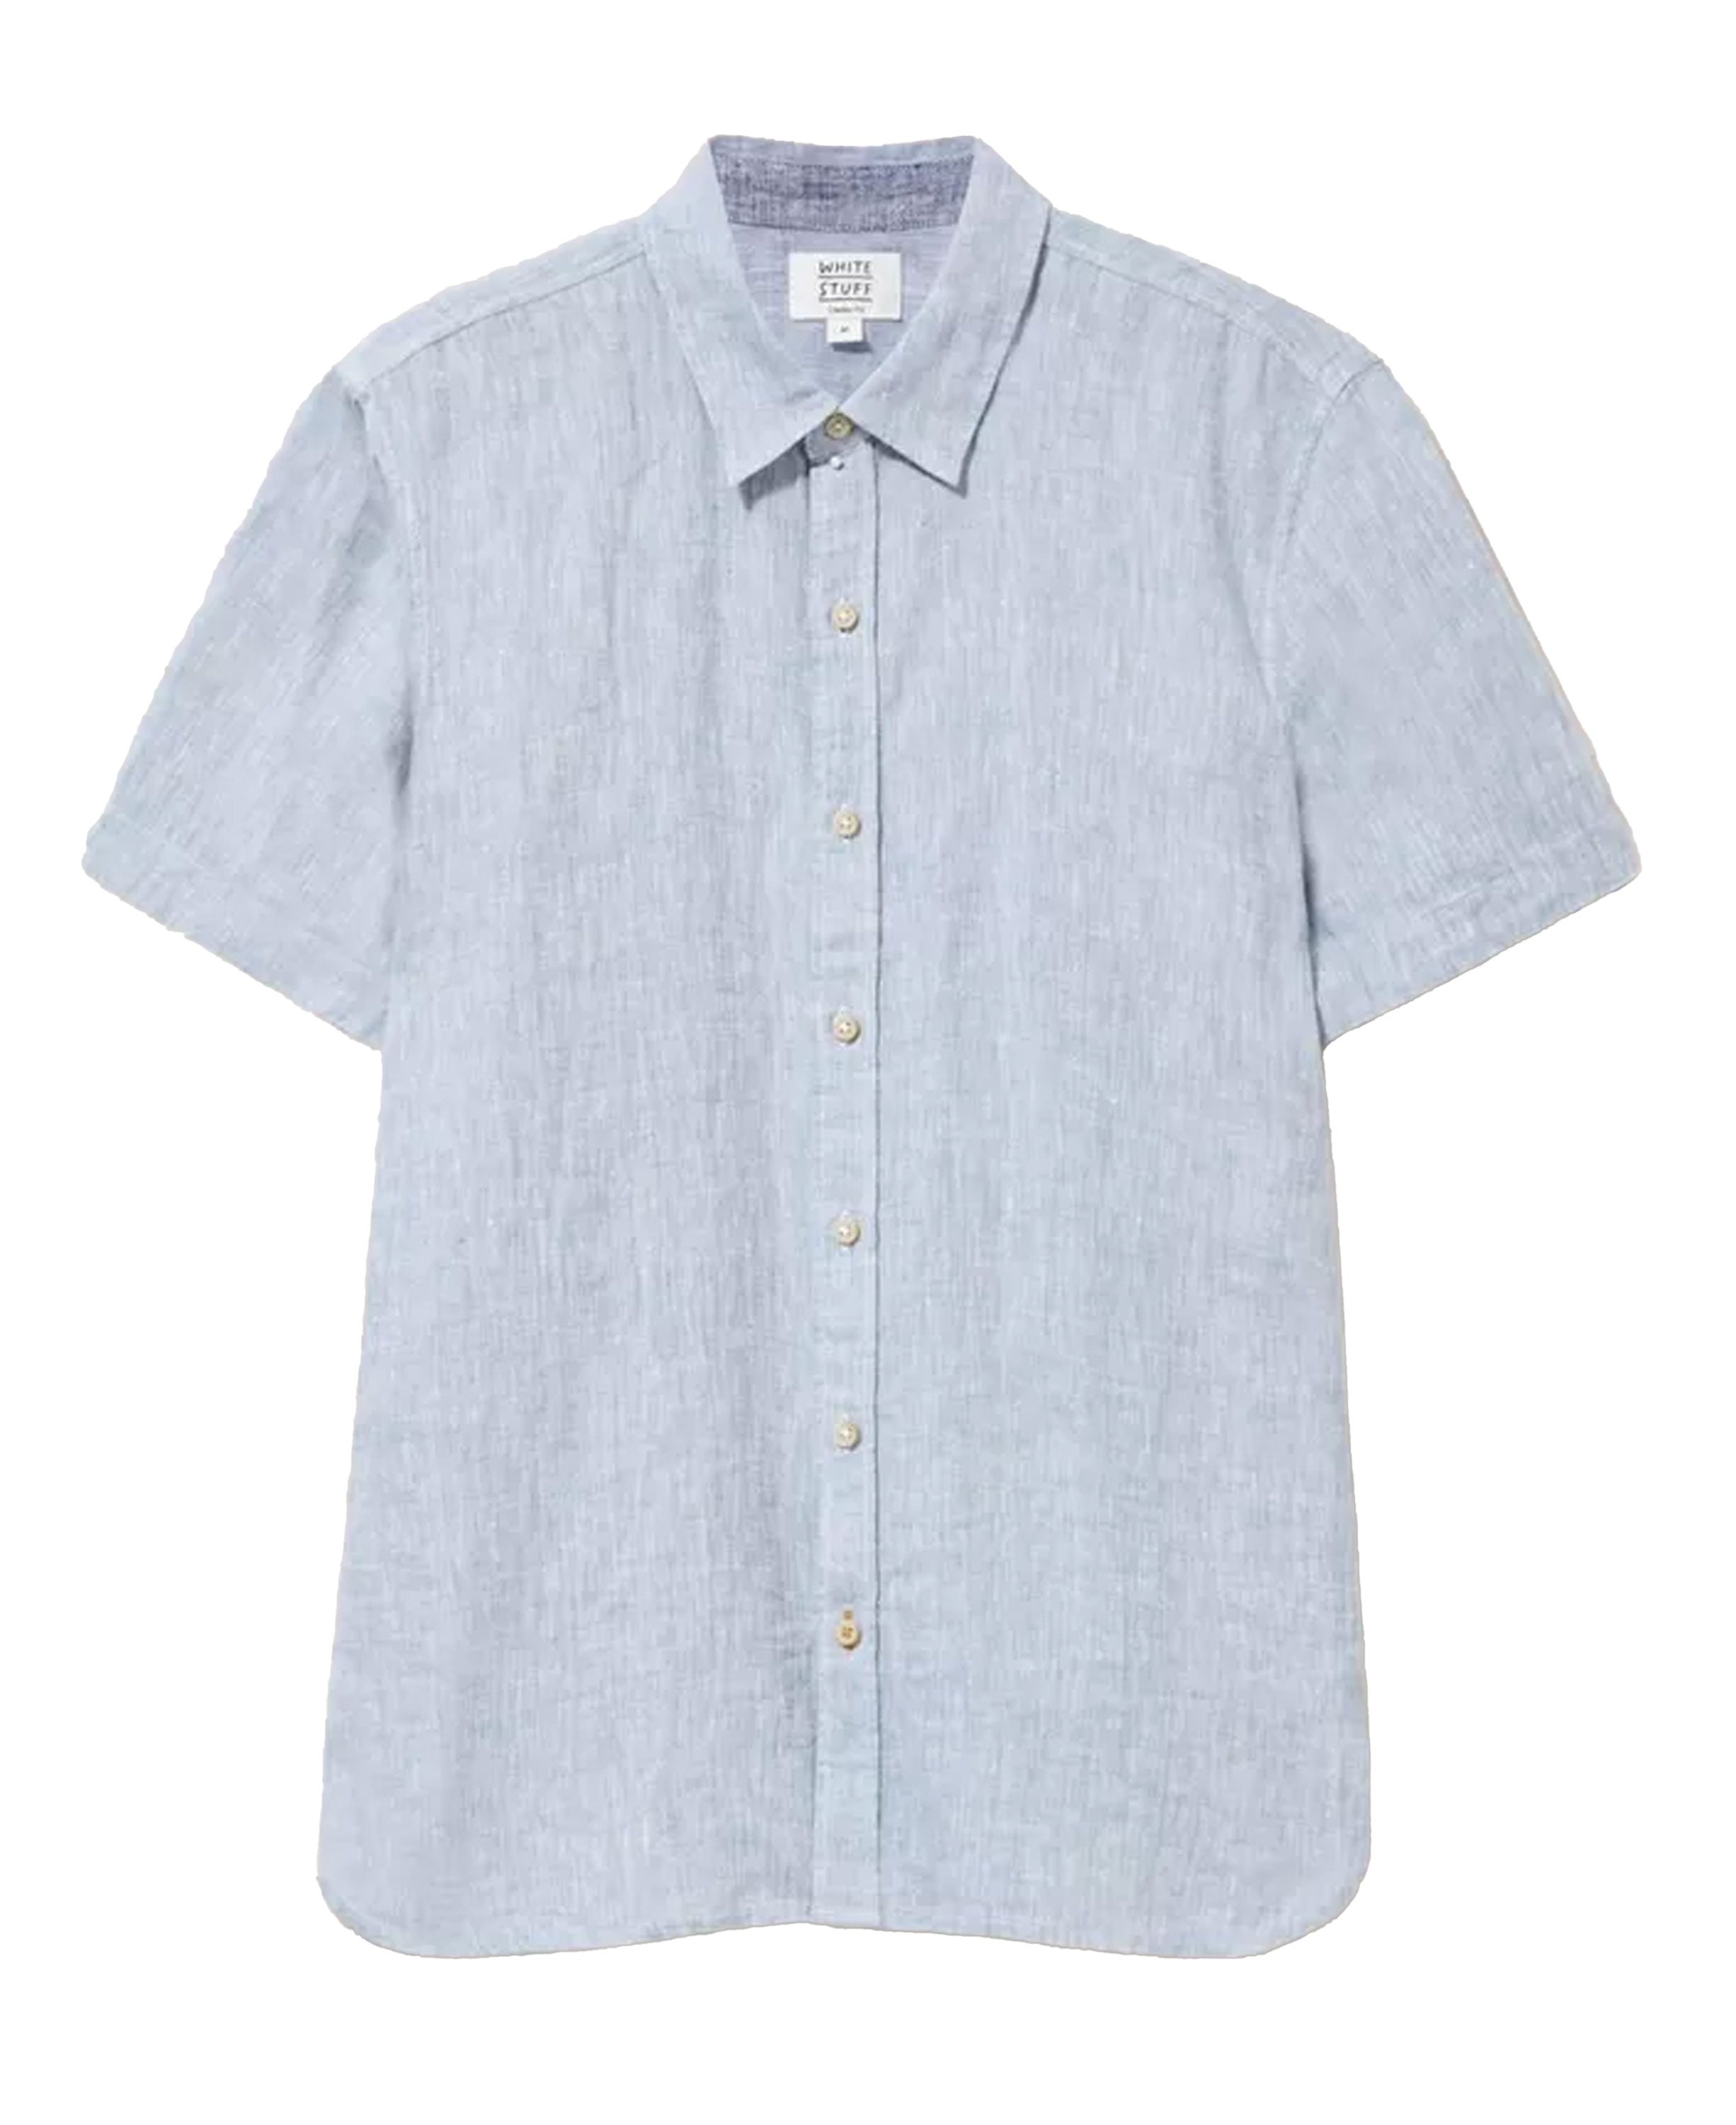 Pembroke Short Sleeve Linen Shirt - Chambray Blue